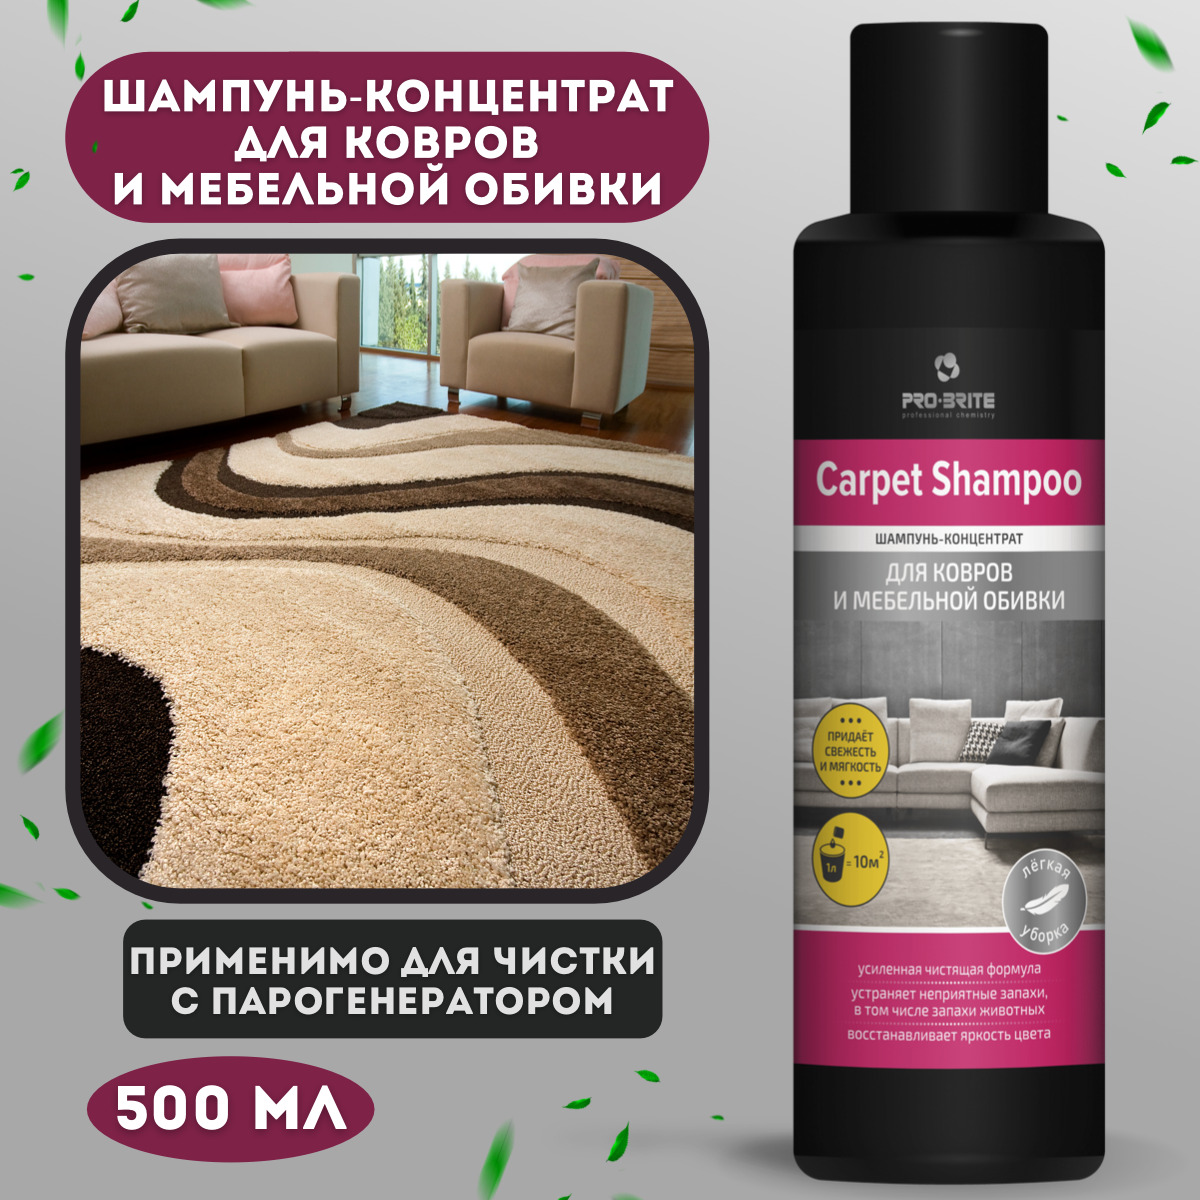 Pro-Brite Carpet Shampoo